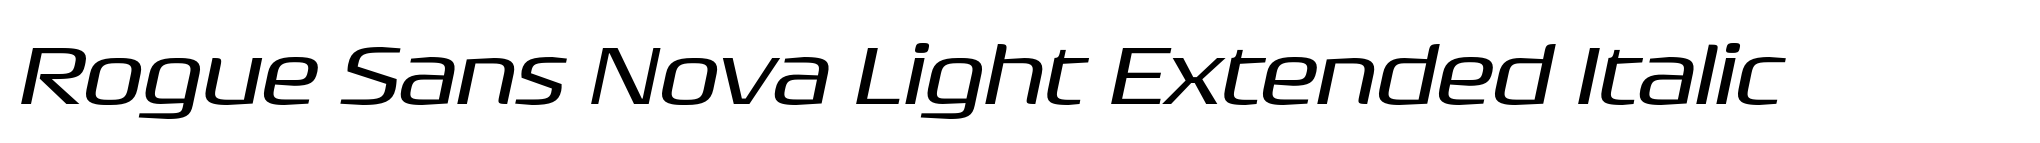 Rogue Sans Nova Light Extended Italic image